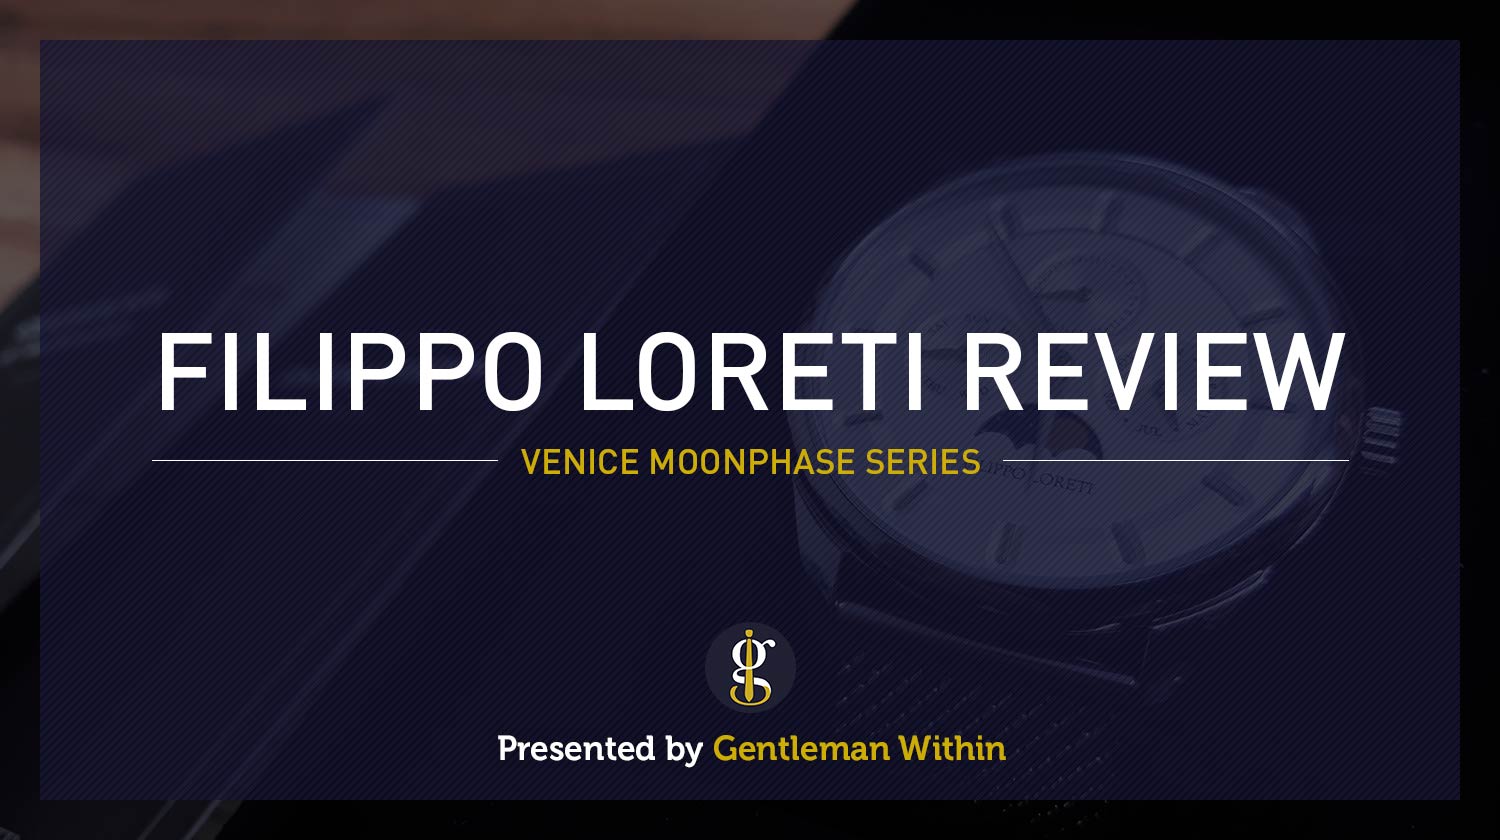 Filippo Loreti Review | GENTLEMAN WITHIN